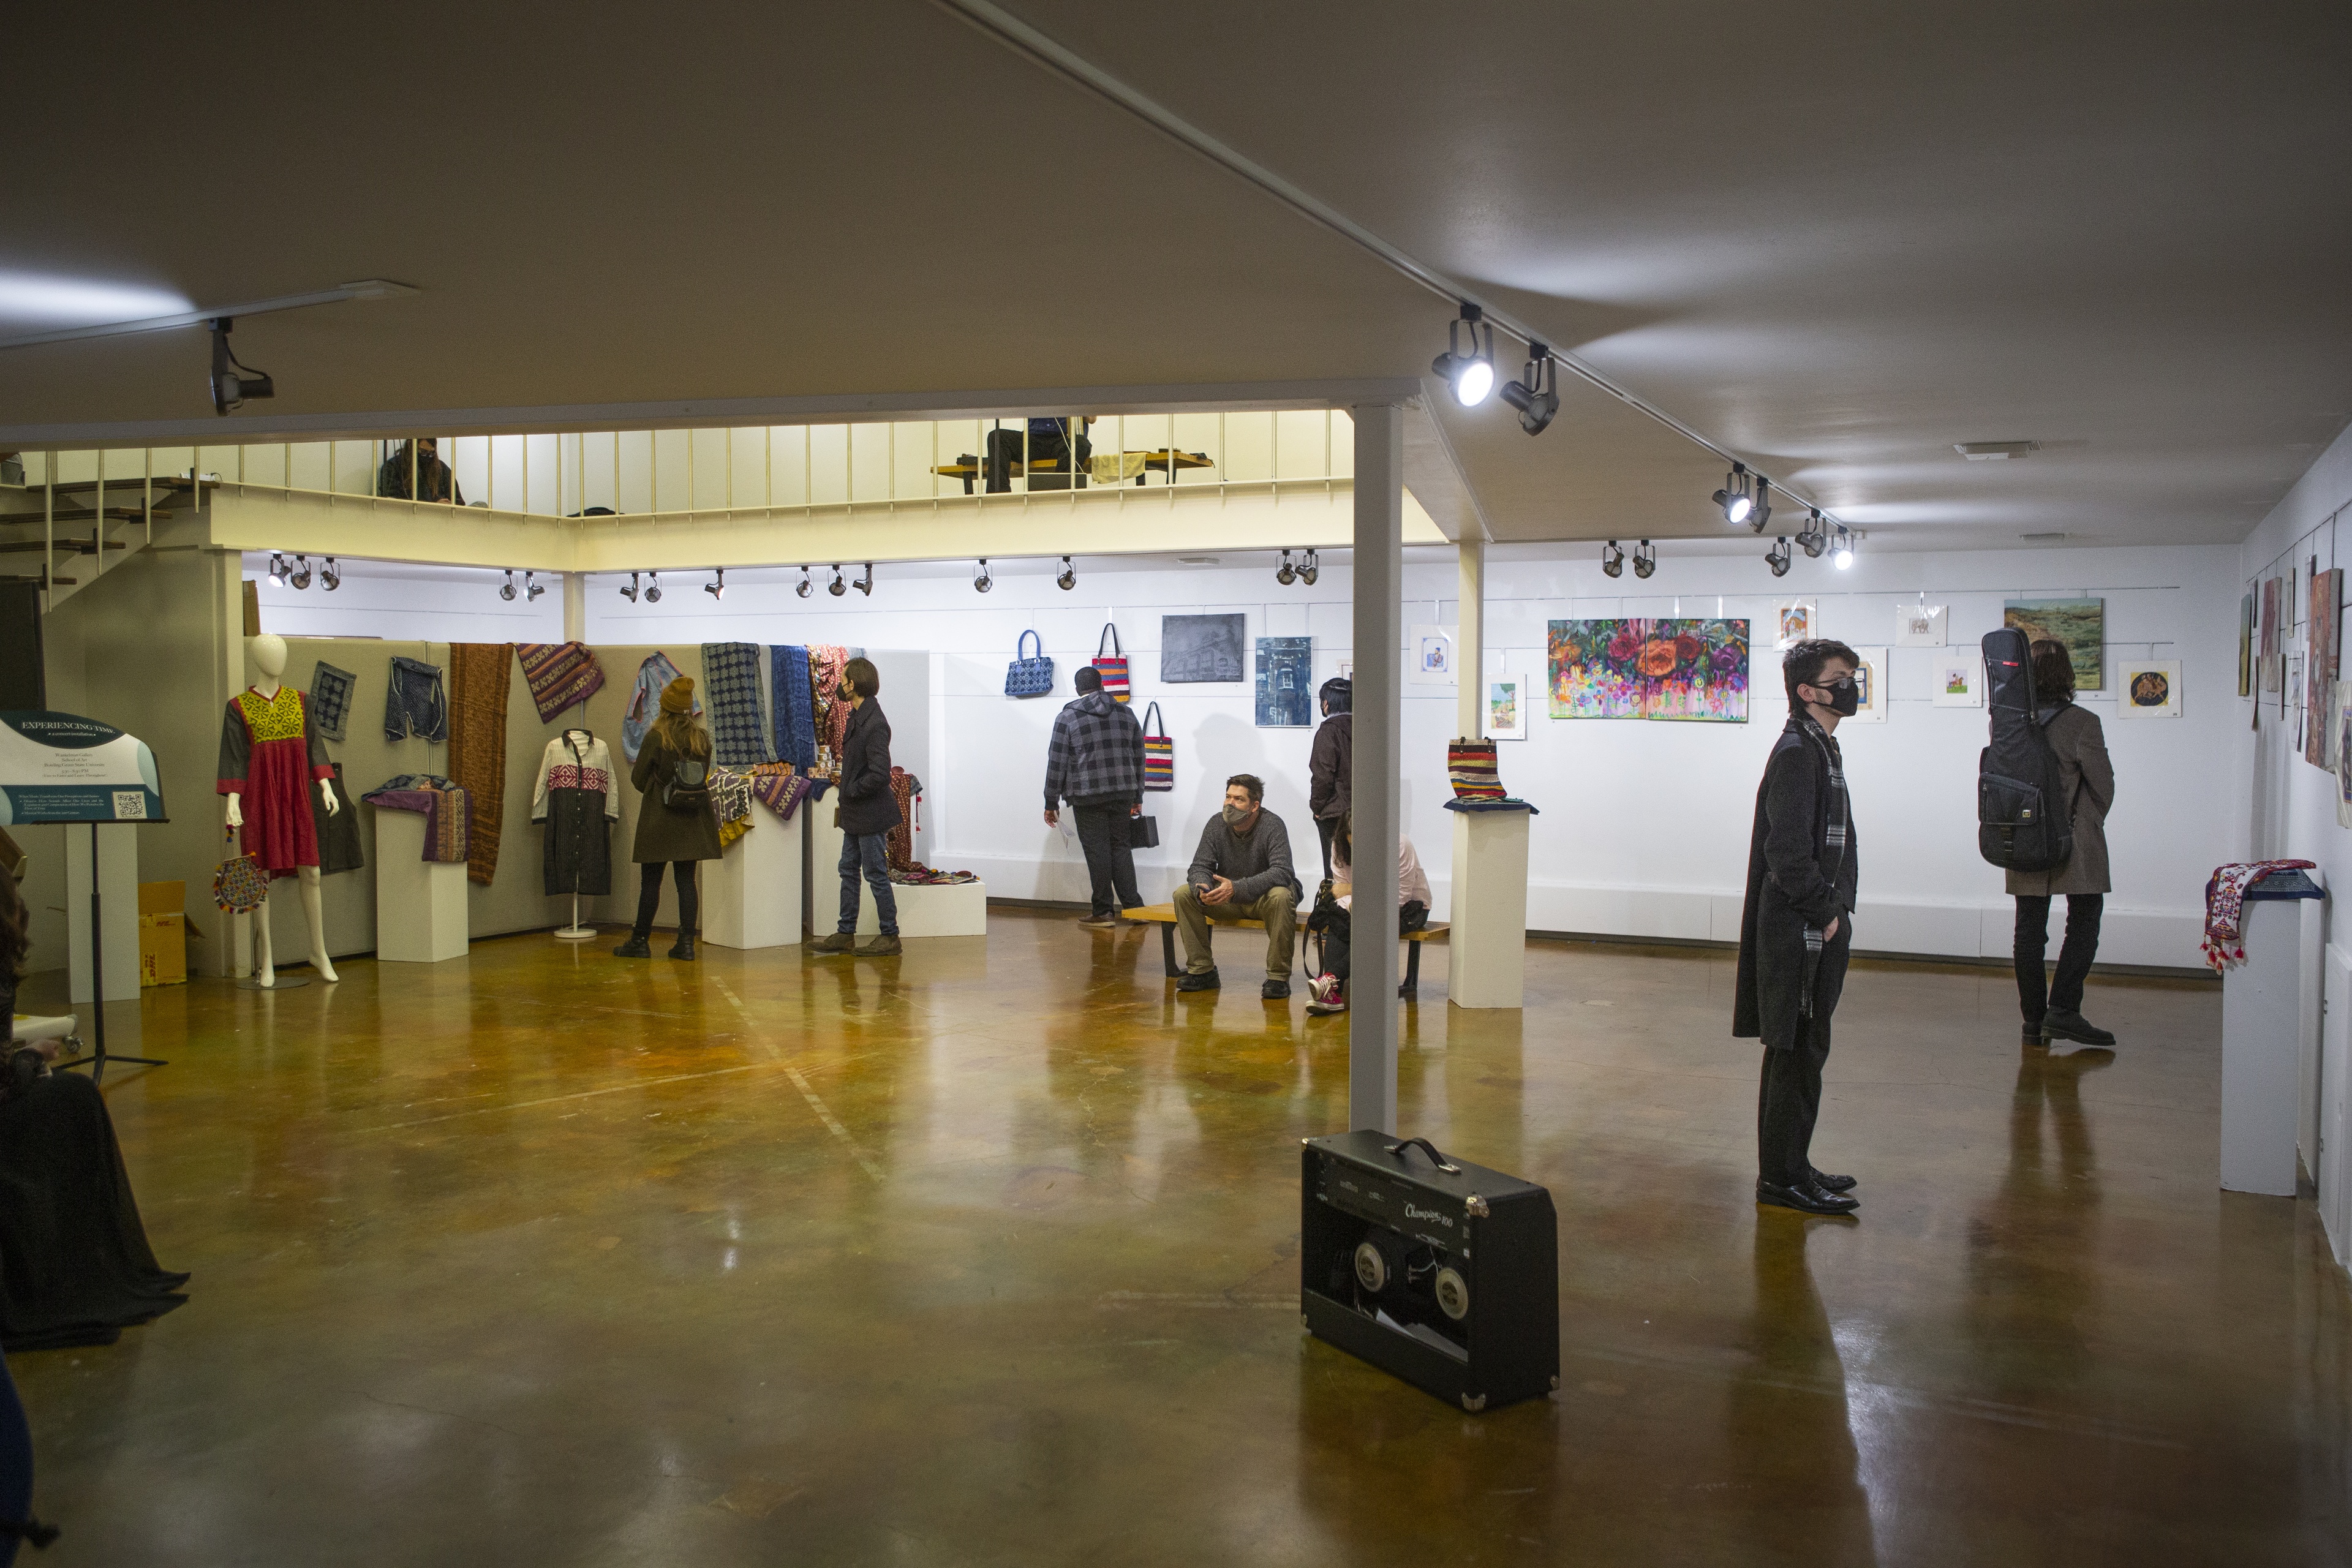 People looking at artwork in a gallery